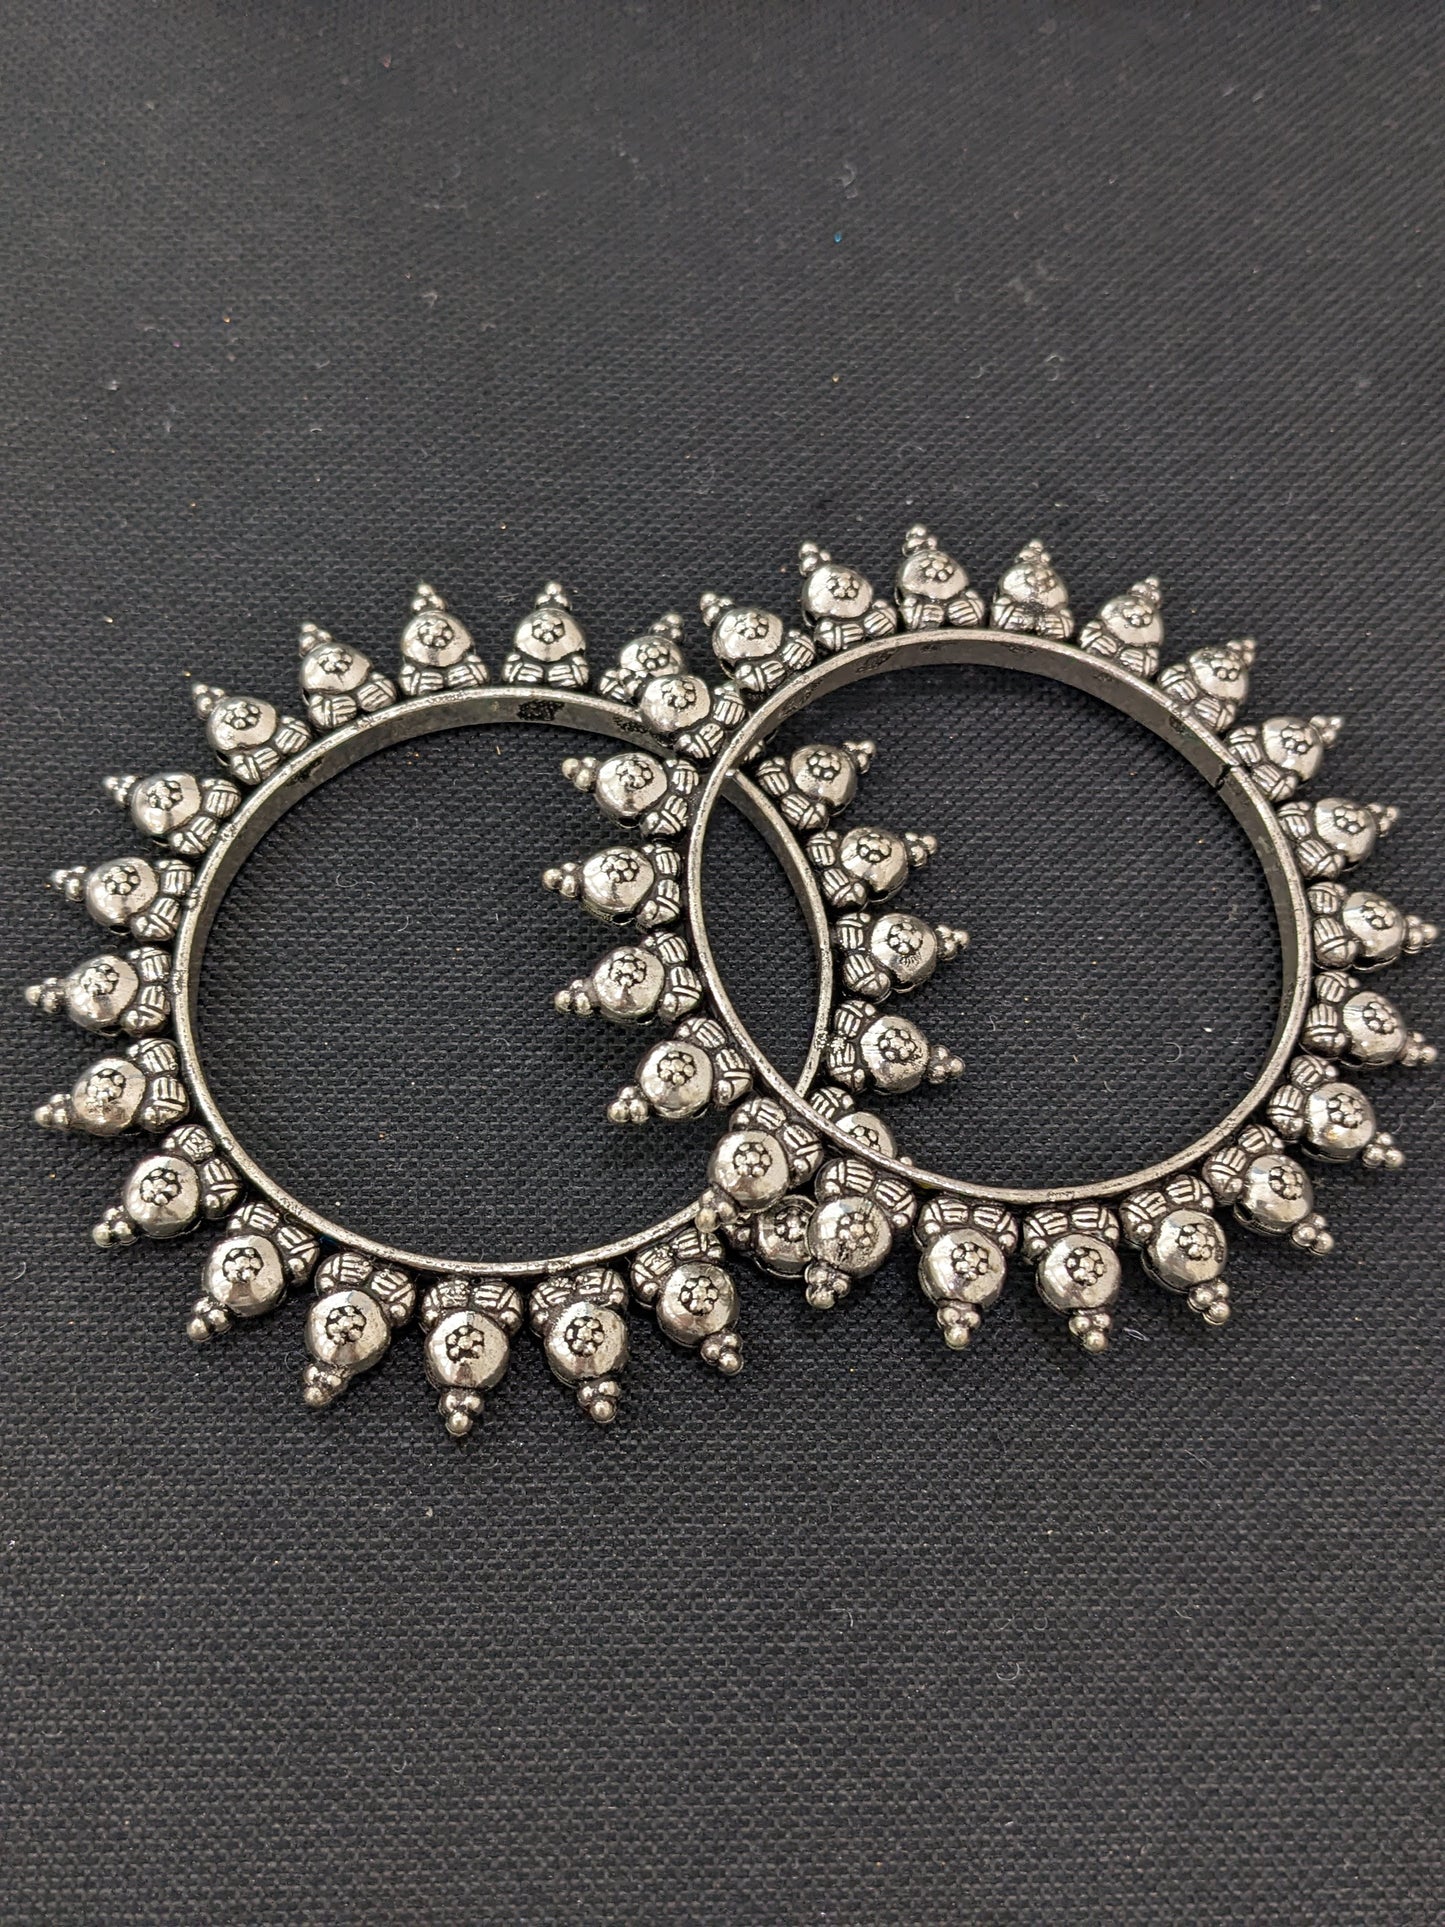 Oxidized silver pair bangles - Flower ball design